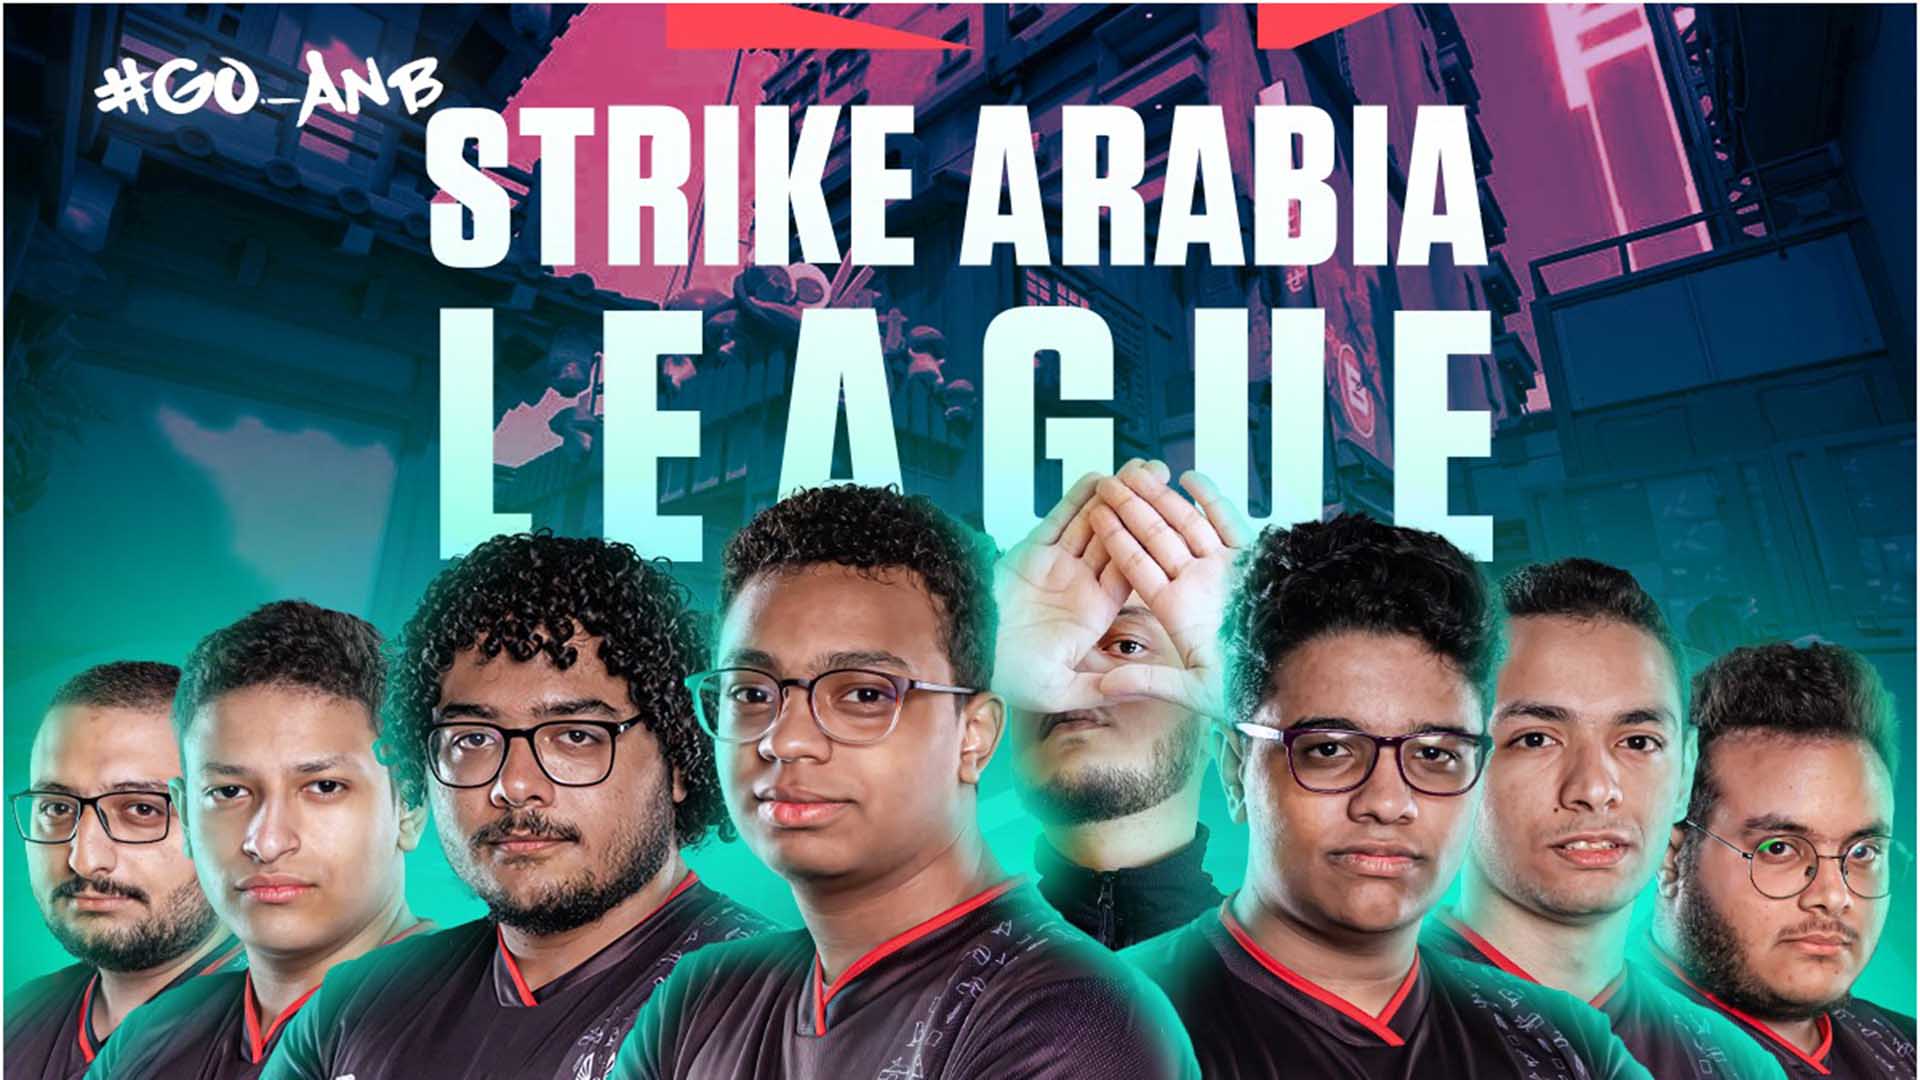 Strike Arabia League